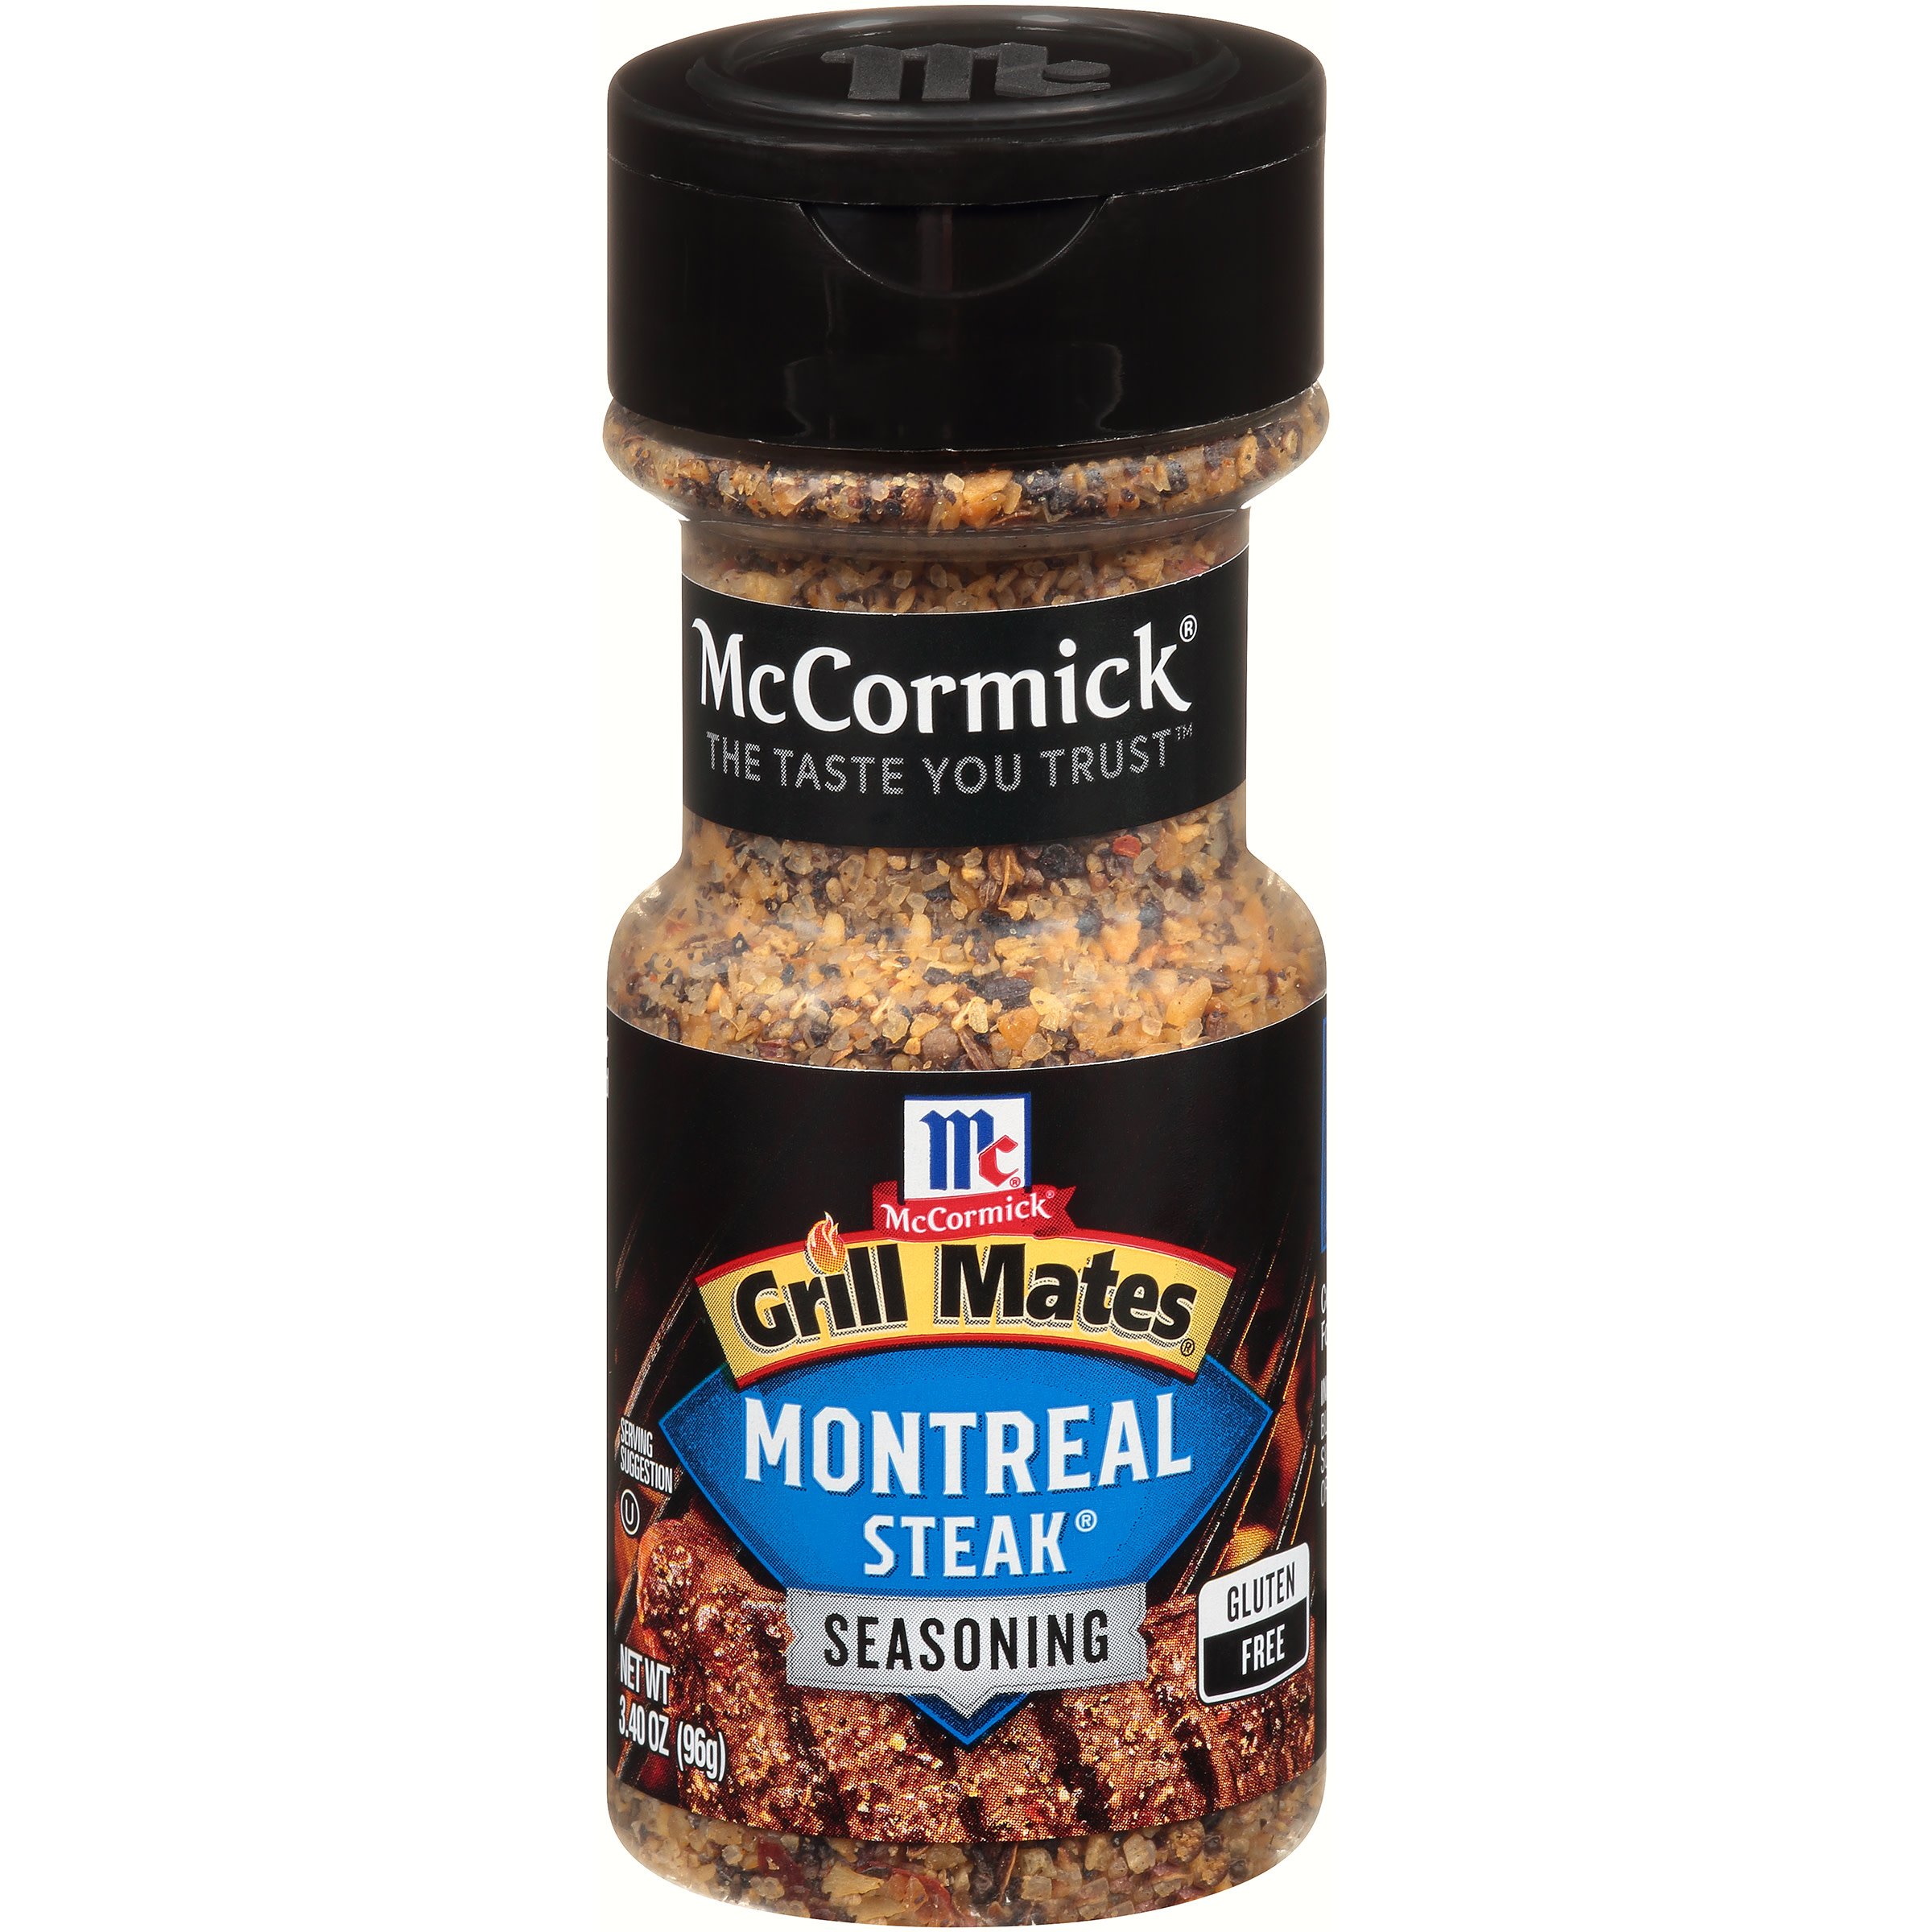 McCormick Grill Mates Montreal Steak Seasoning - Shop Spice Mixes at H-E-B